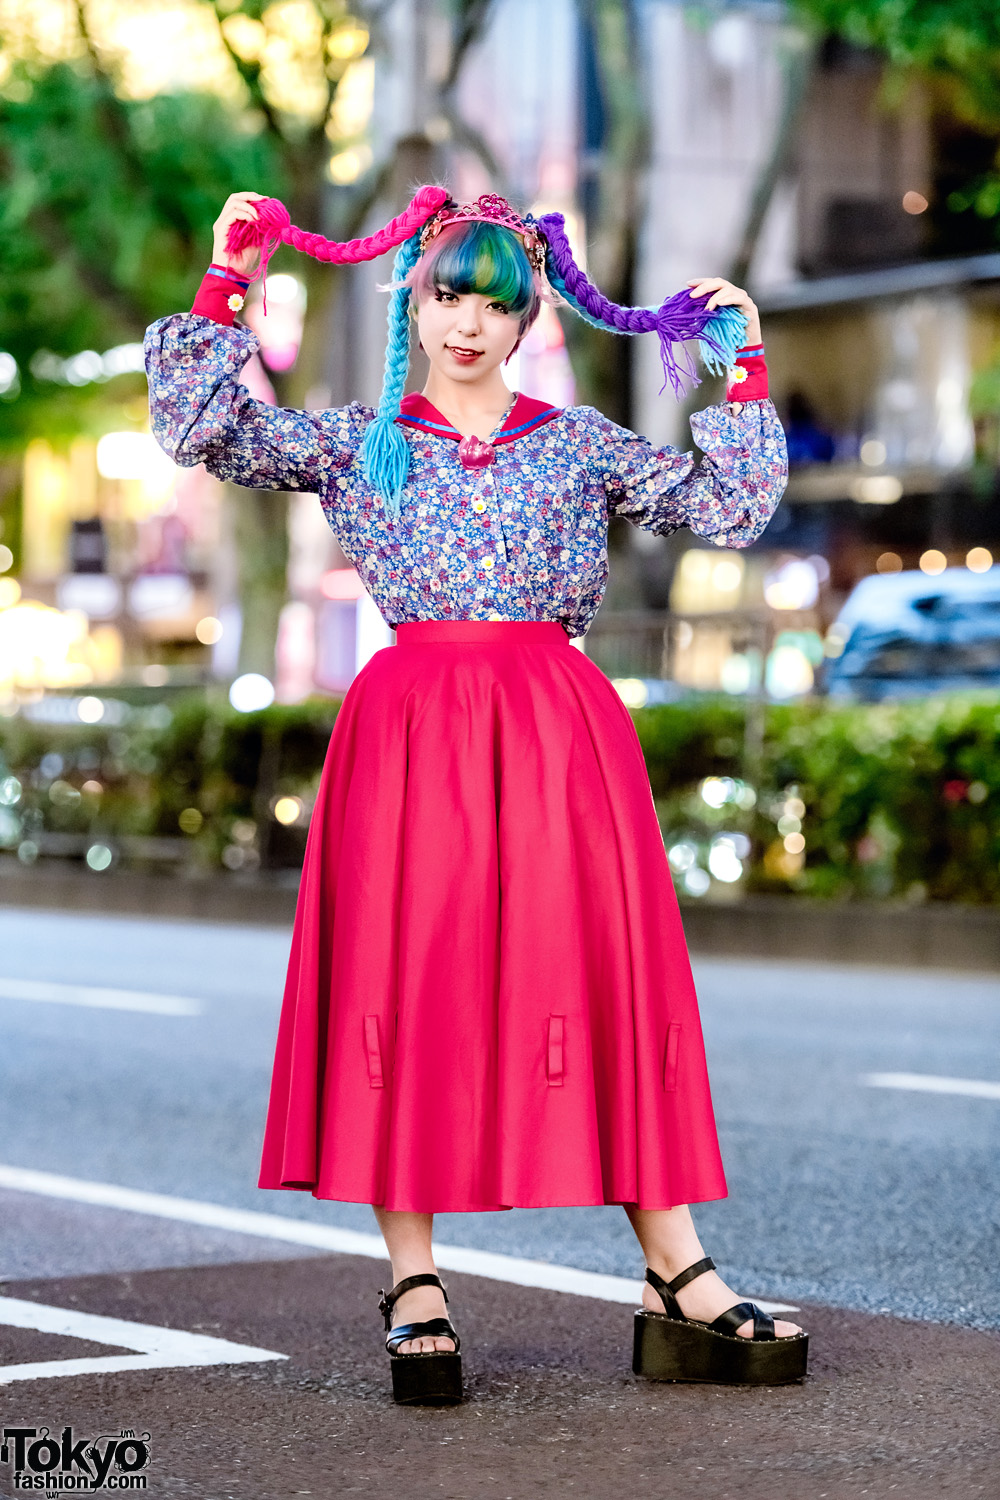 Harajuku Girl's Doll-inspired DIY Street Style w/ Colorful Yarn Hair, Sailor Blouse, Pleated Skirt & Tiara